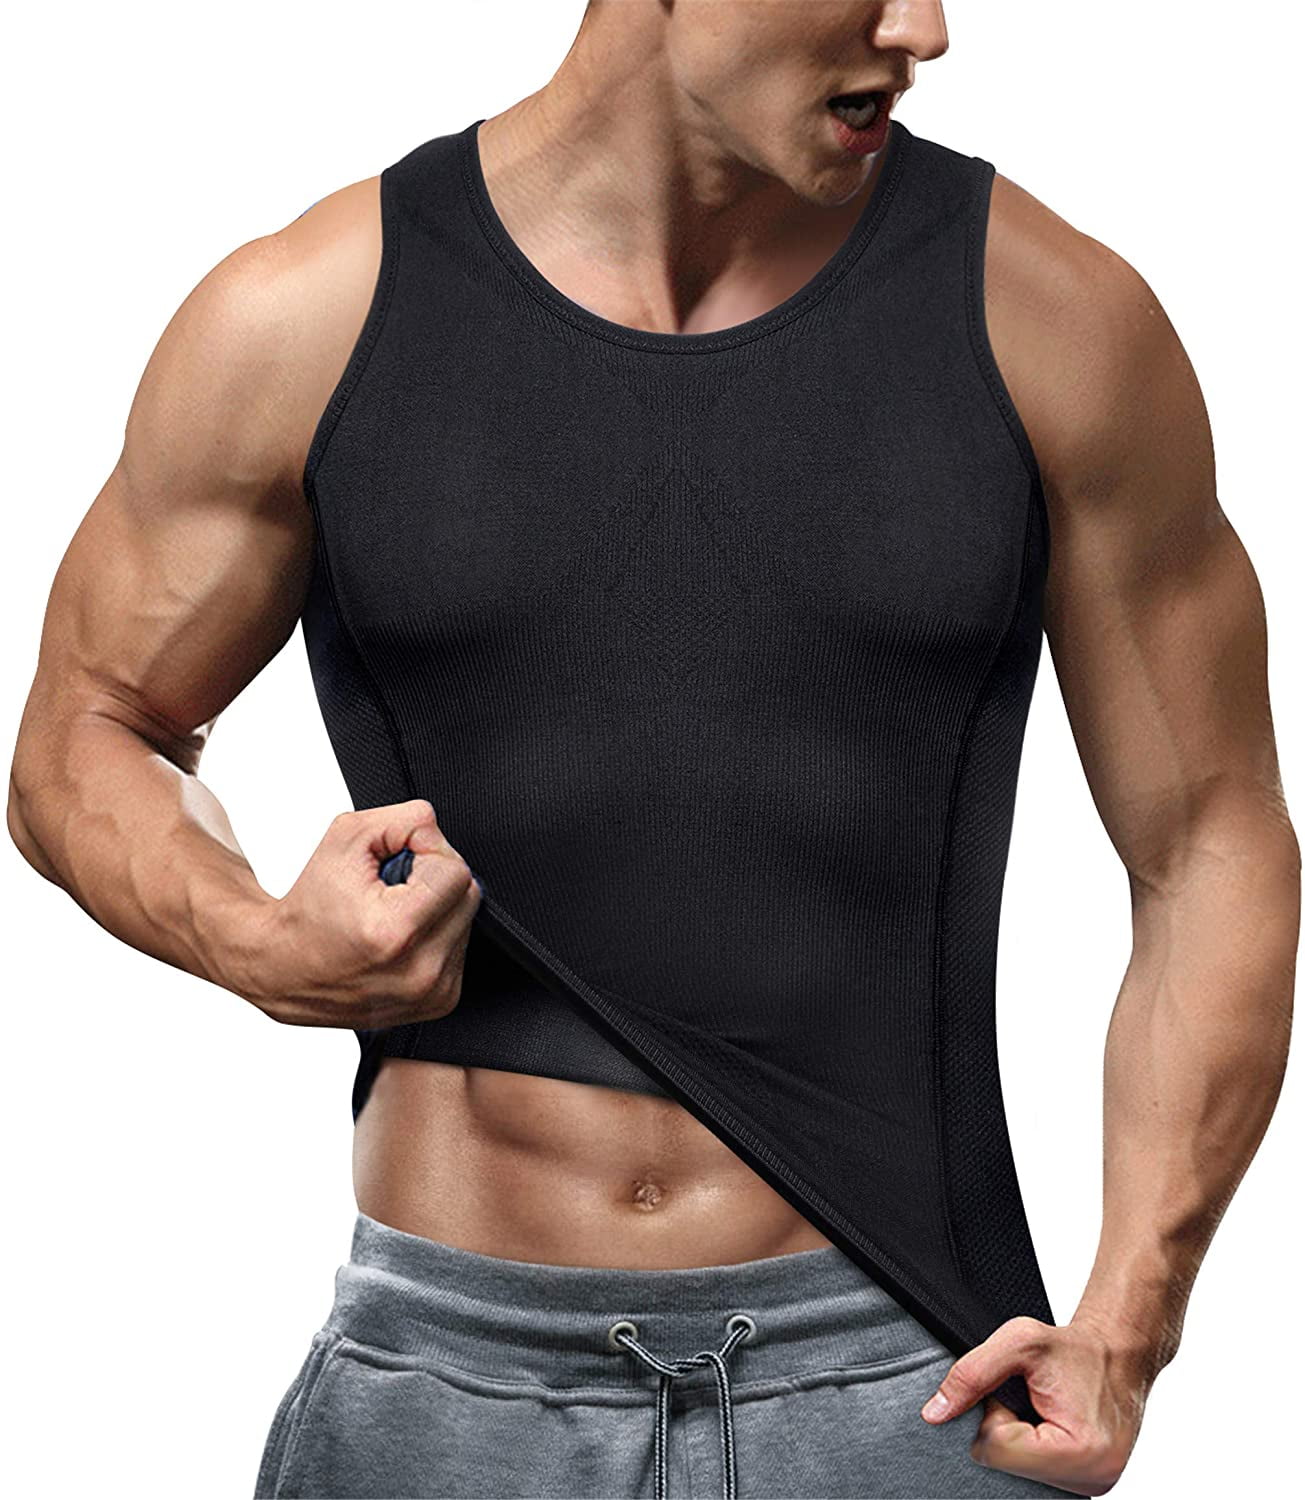 Men's Sauna Suit Sweat Vest Waist Trainer Body Shaper Tank Top Compression Shirt 